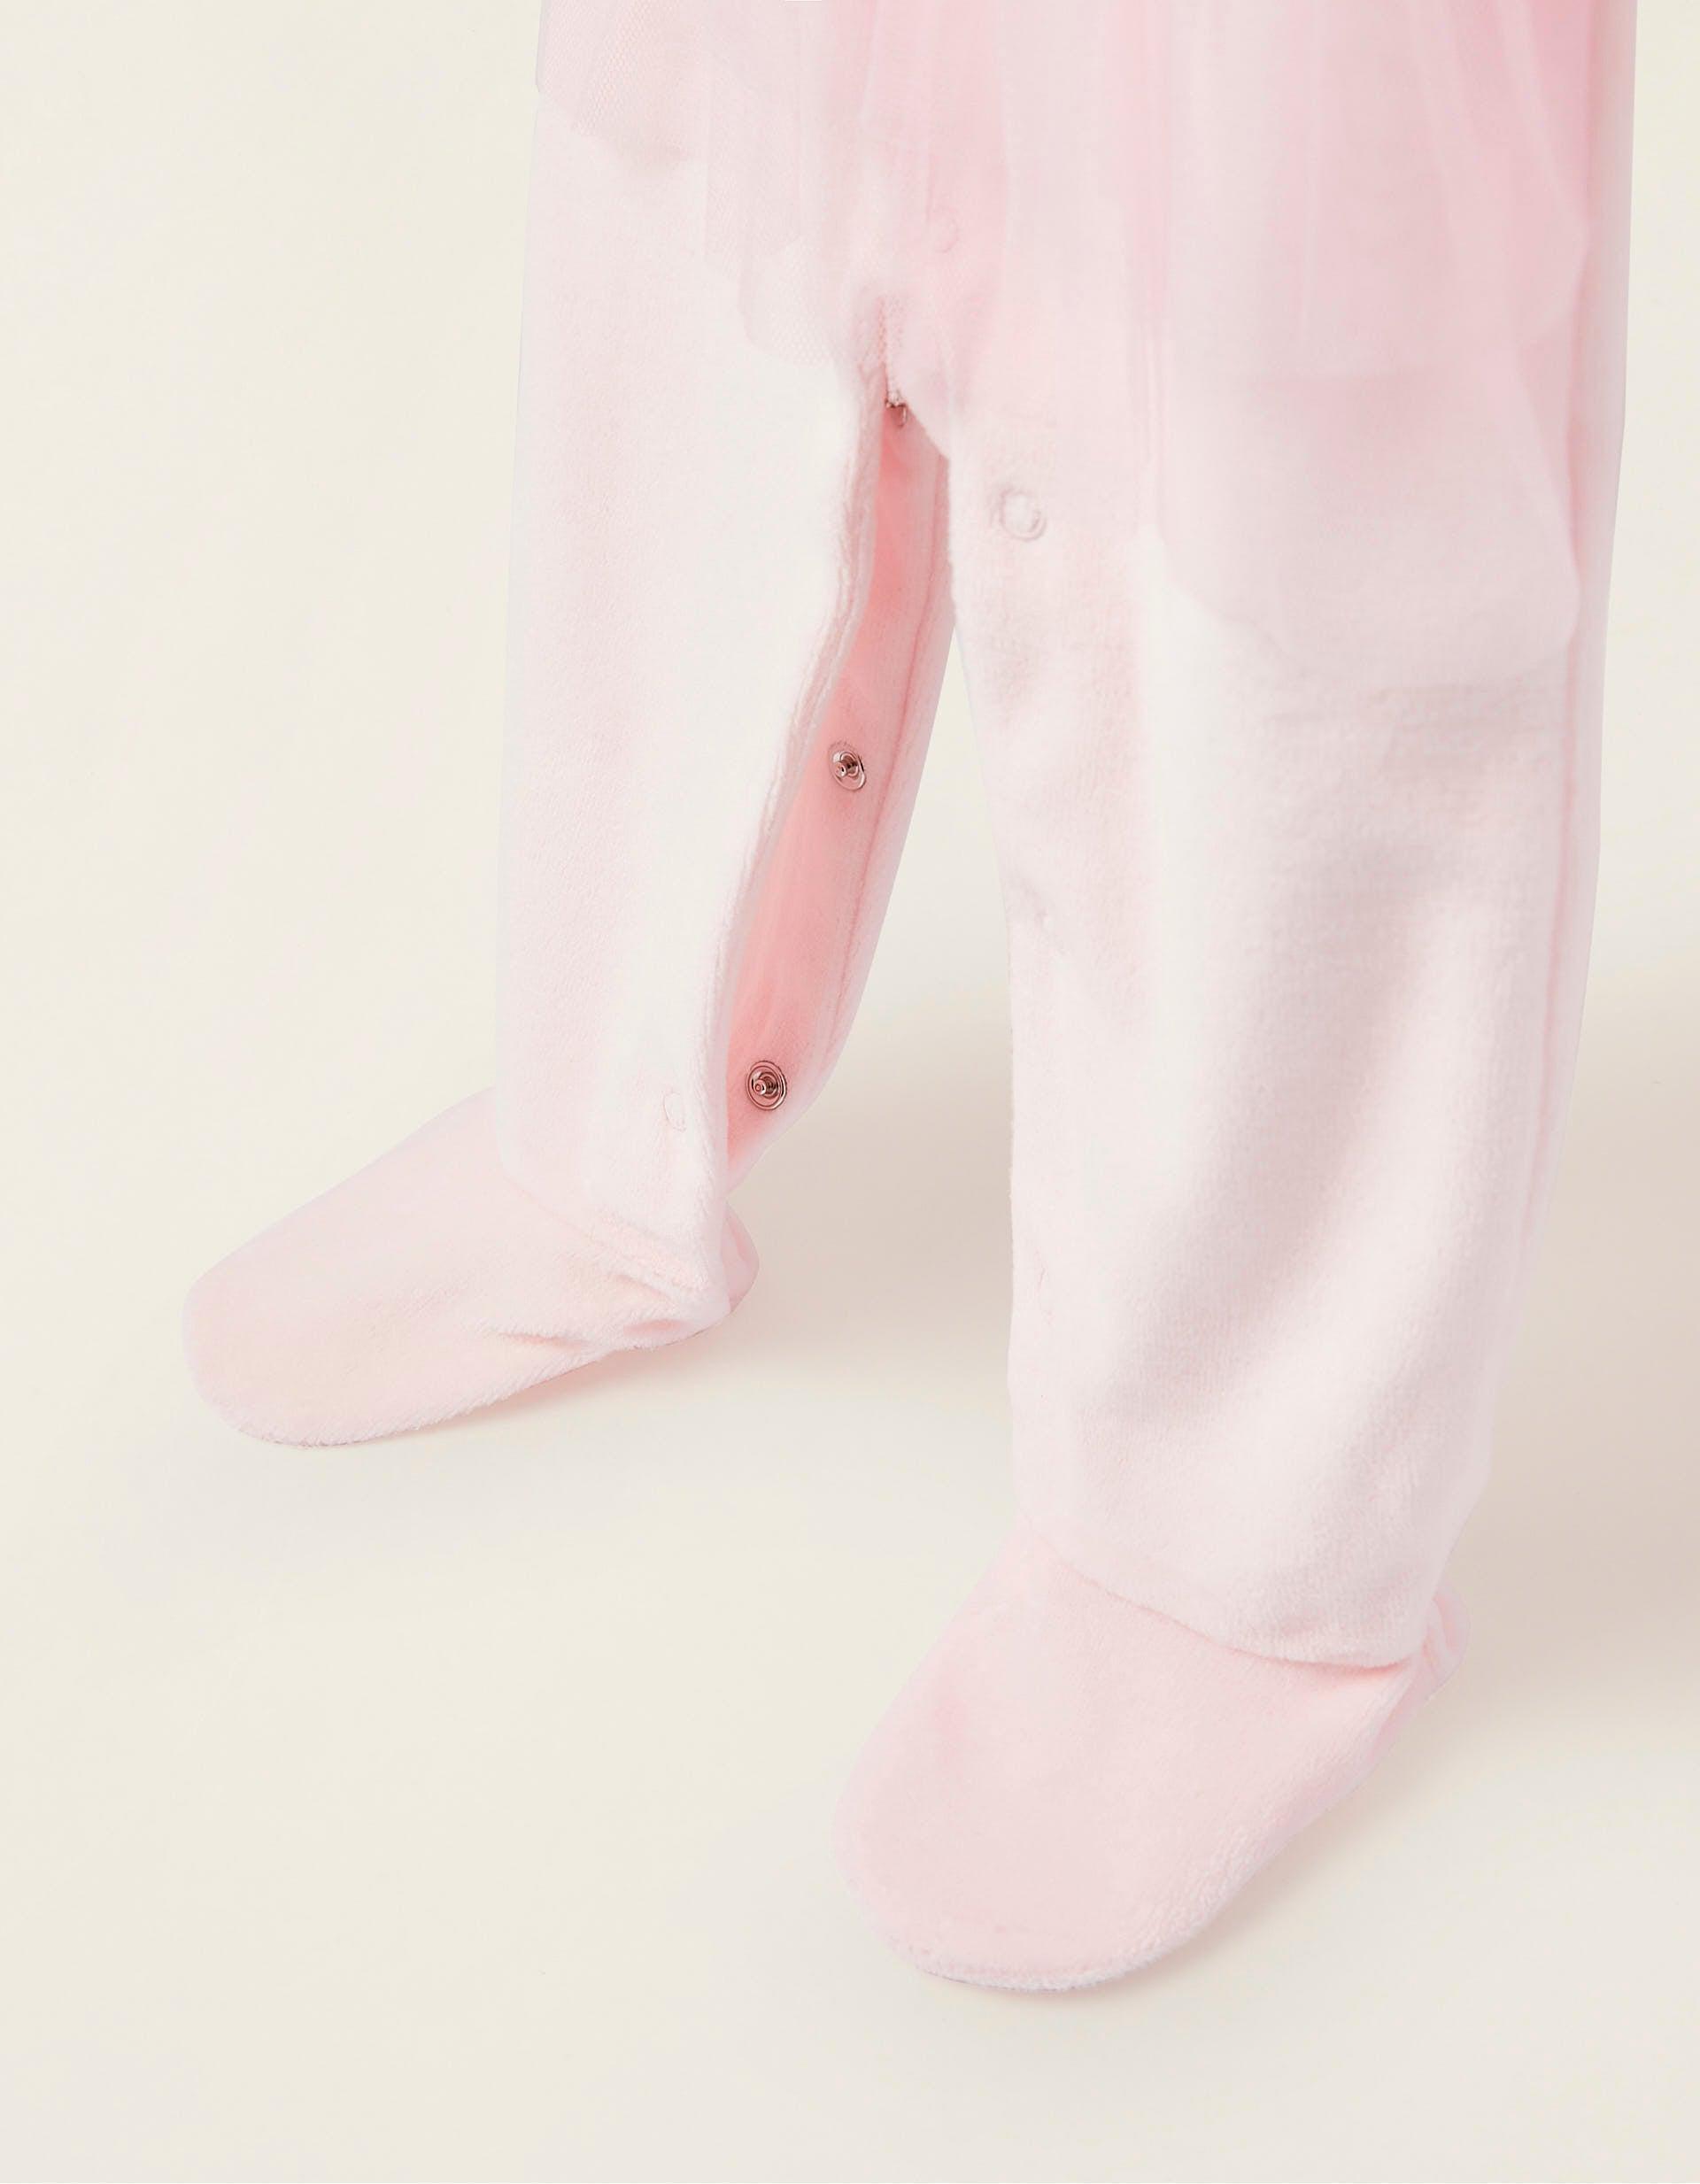 Zippy - Pink Ballerina Cat Velour Sleepsuit, Baby Girls